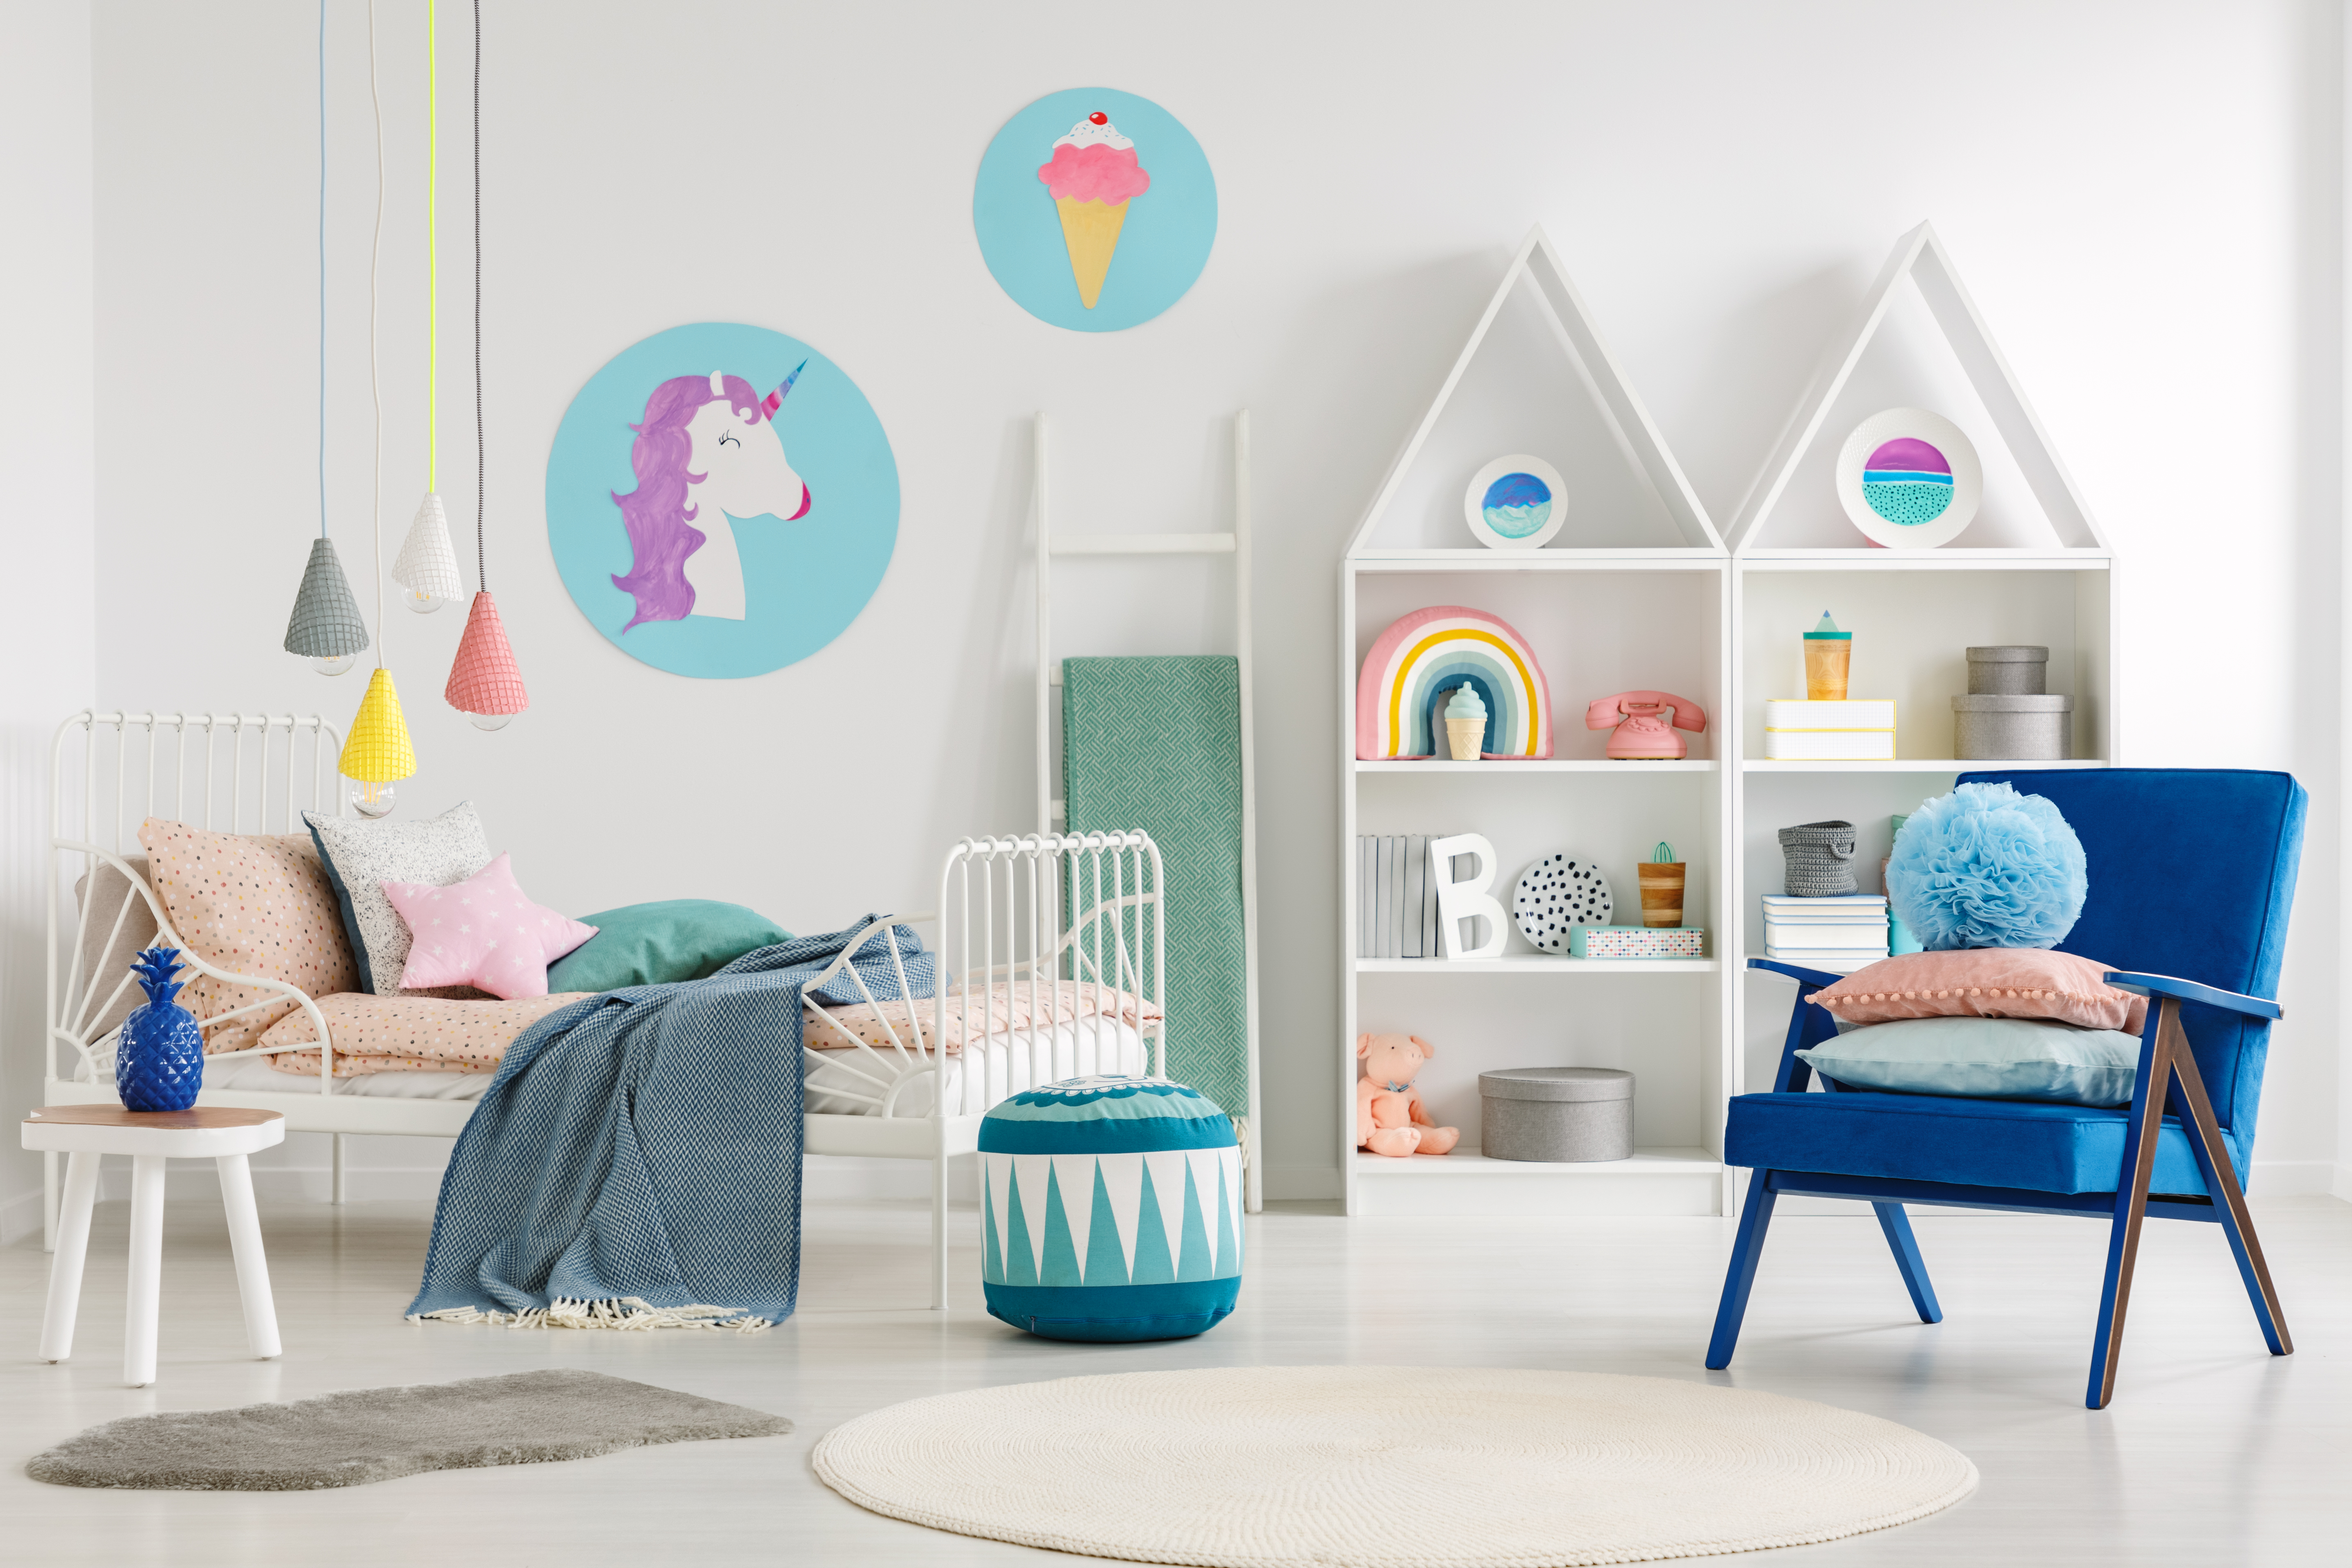 colorful-kids-bedroom-interior-l2qk5fx.jpg